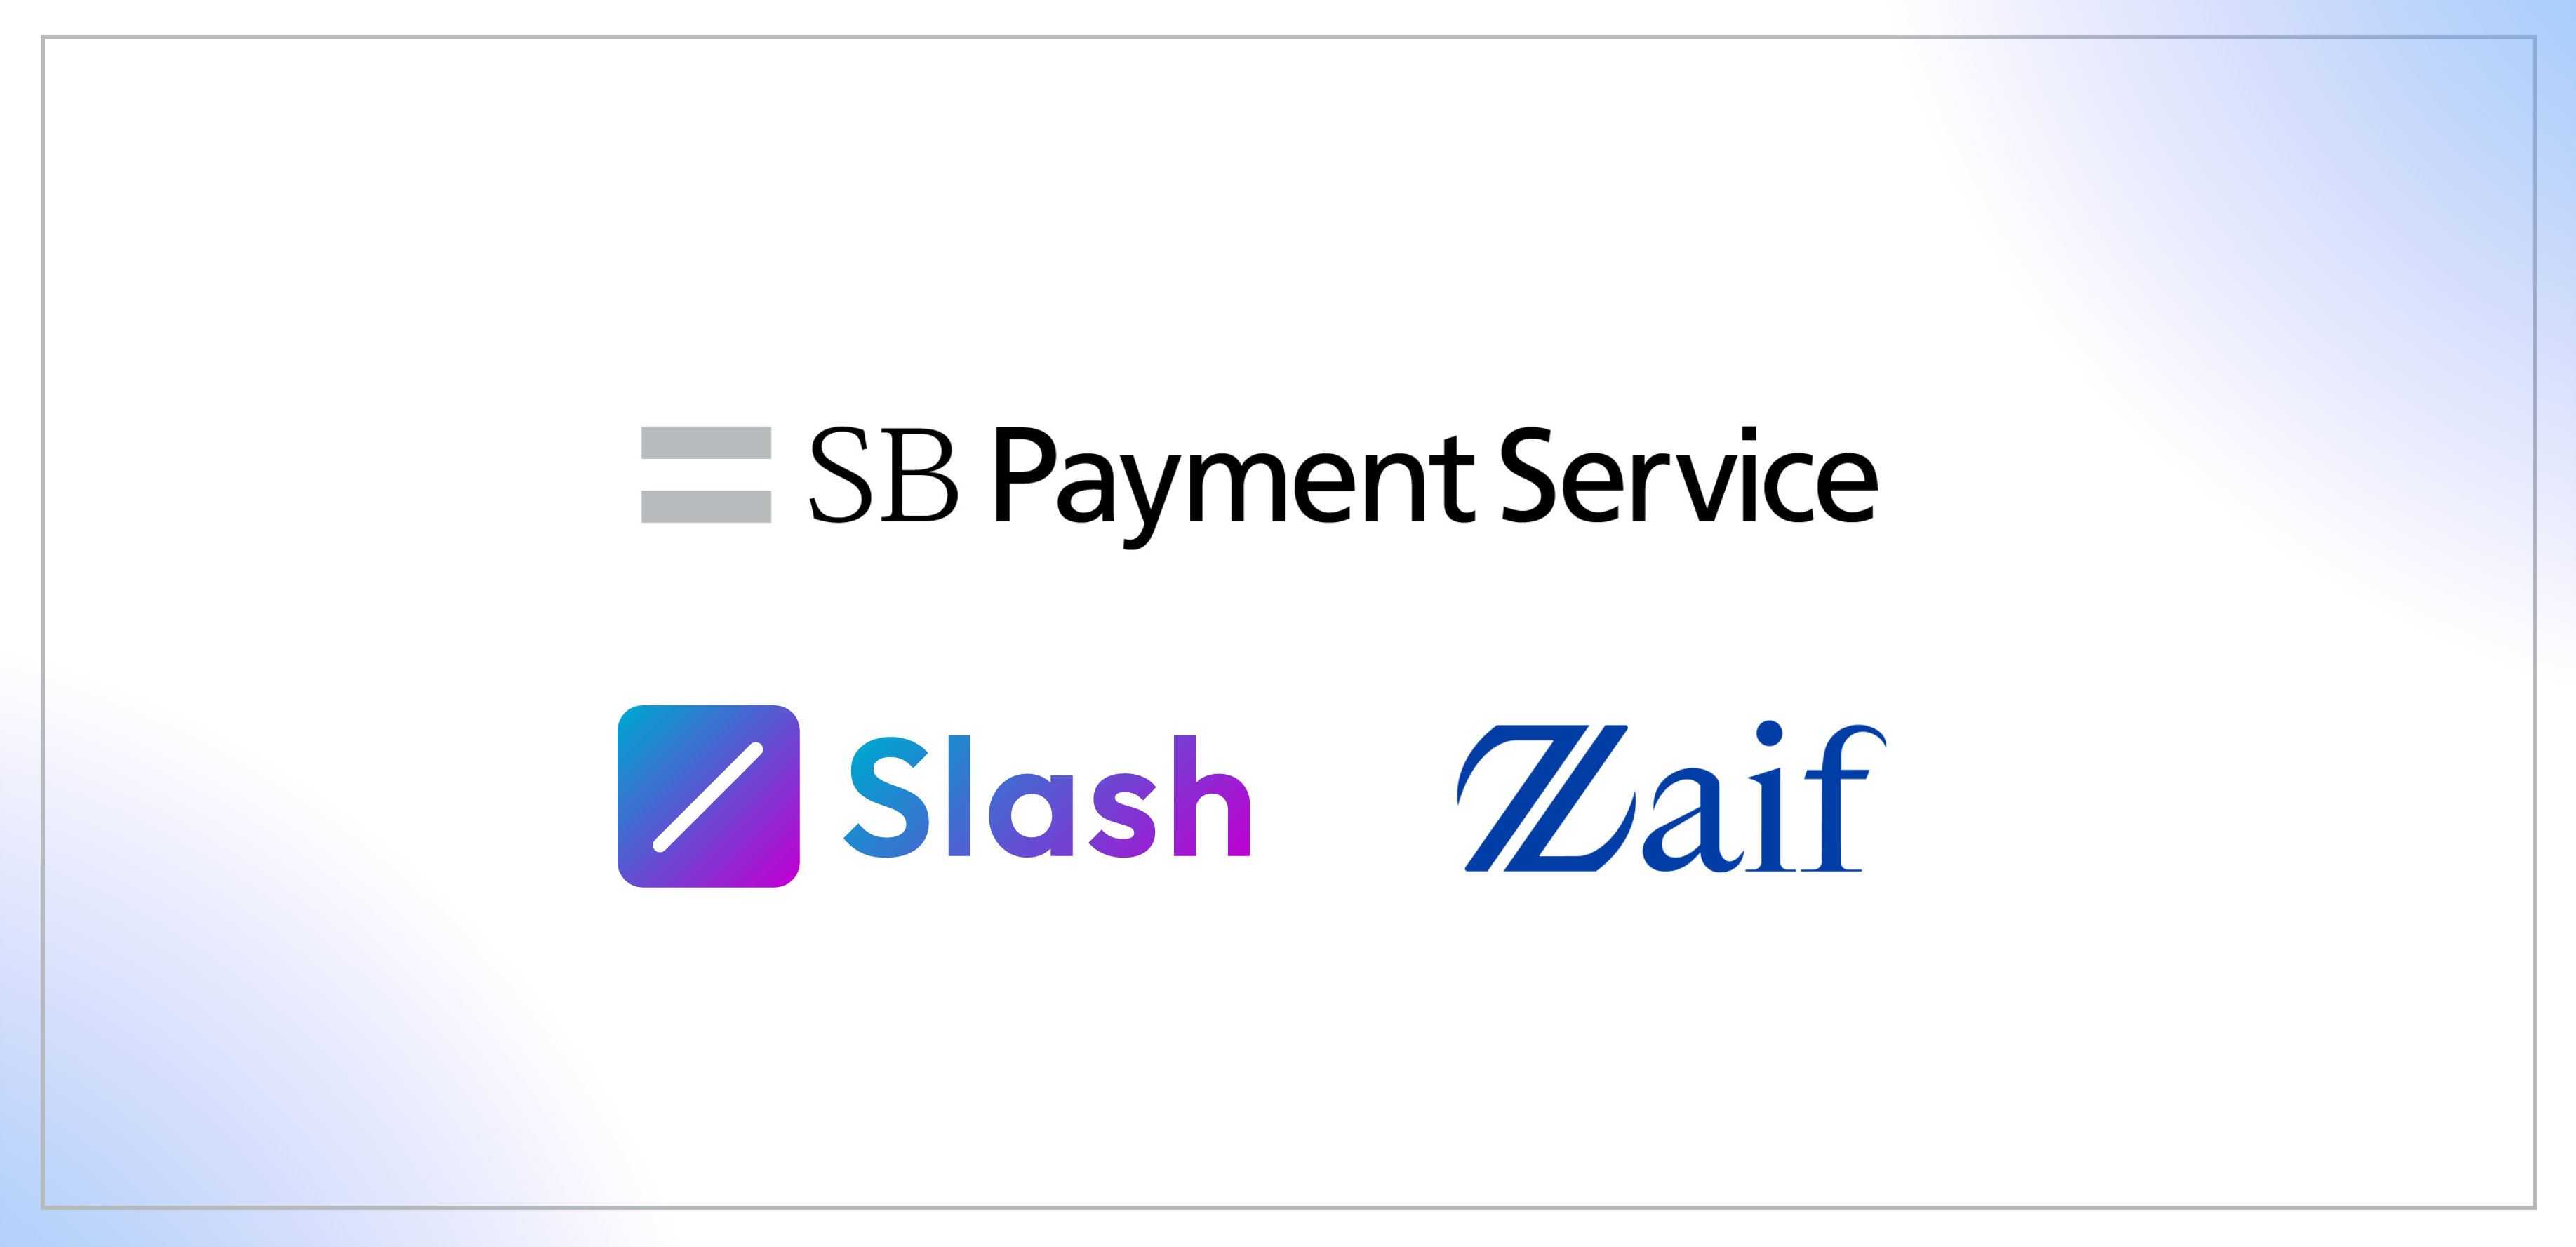 Slash Fintech Limited、SBペイメントサービスおよび
カイカエクスチェンジがスマートコントラクト決済の
普及促進に向けて業務提携契約を締結 – NET24